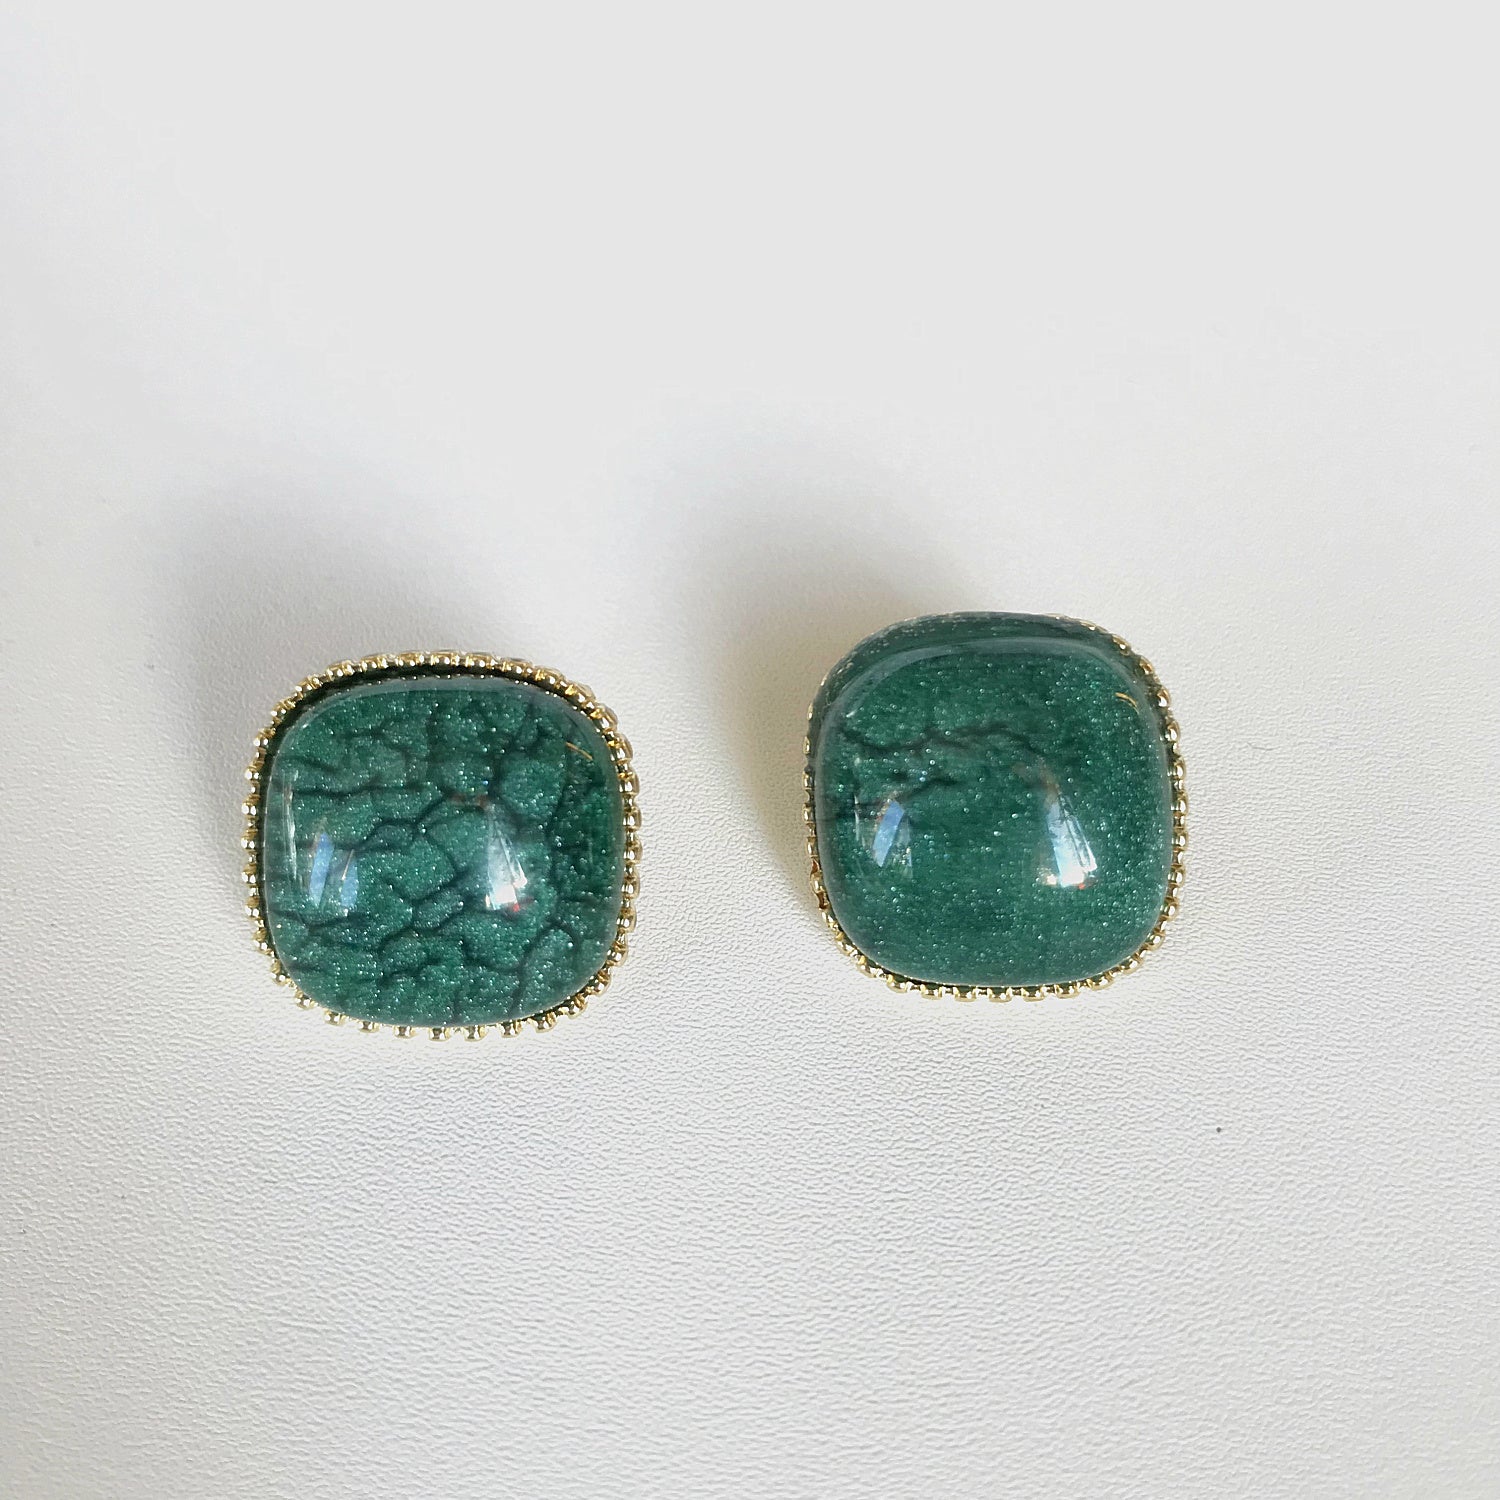 Square Classic Vintage Hemispheric Green Stud Earrings